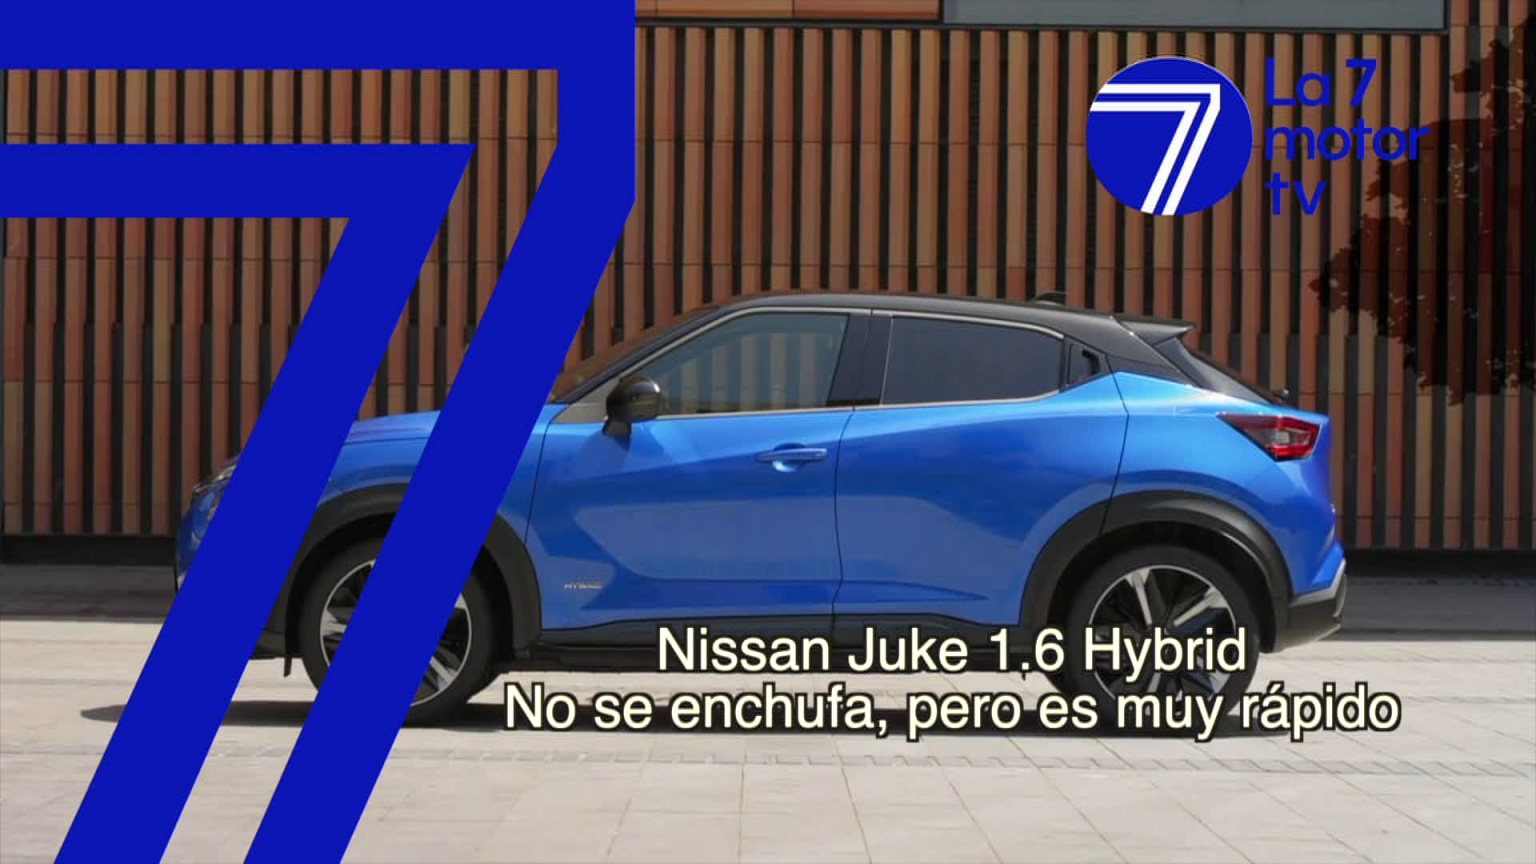 Nissan Juke 1.6 Hybrid: no se enchufa, pero es muy rápido